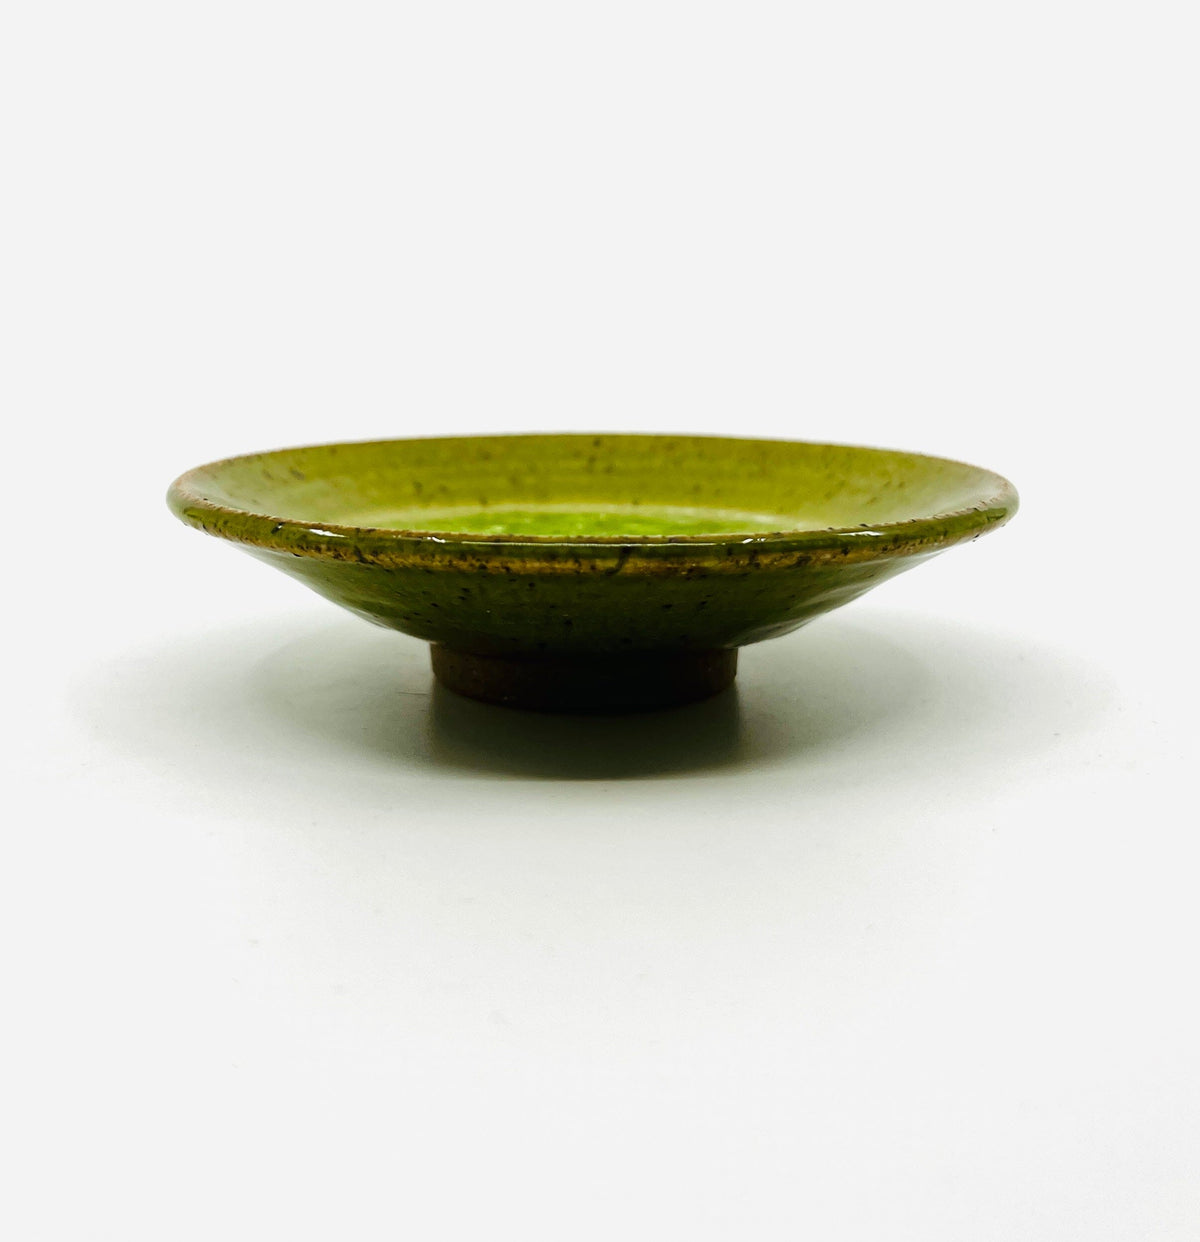 Small Ceramic and Glass Dish, Wheat Grass Decor Dock 6 